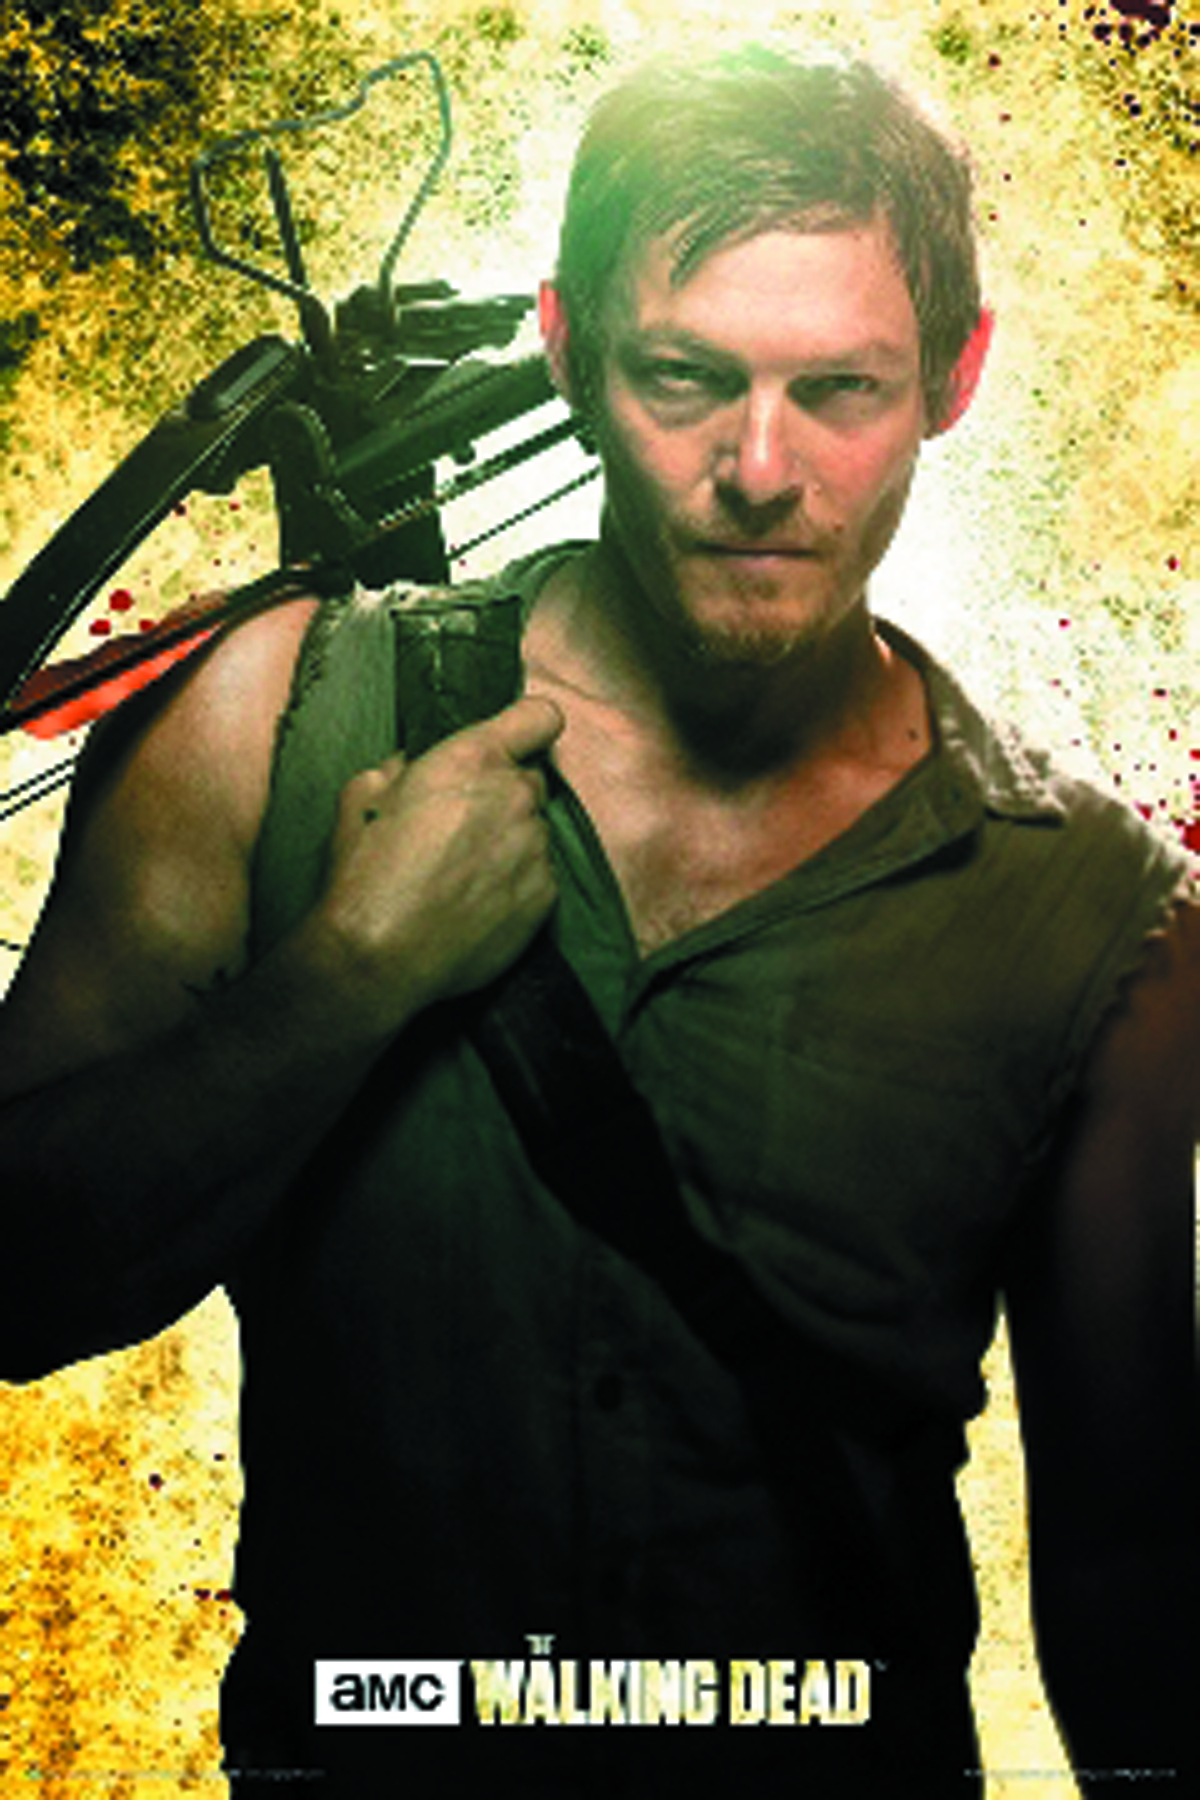 The Walking Dead #78348 Daryl Dixon Terminus Poster Plakat 91x61cm 